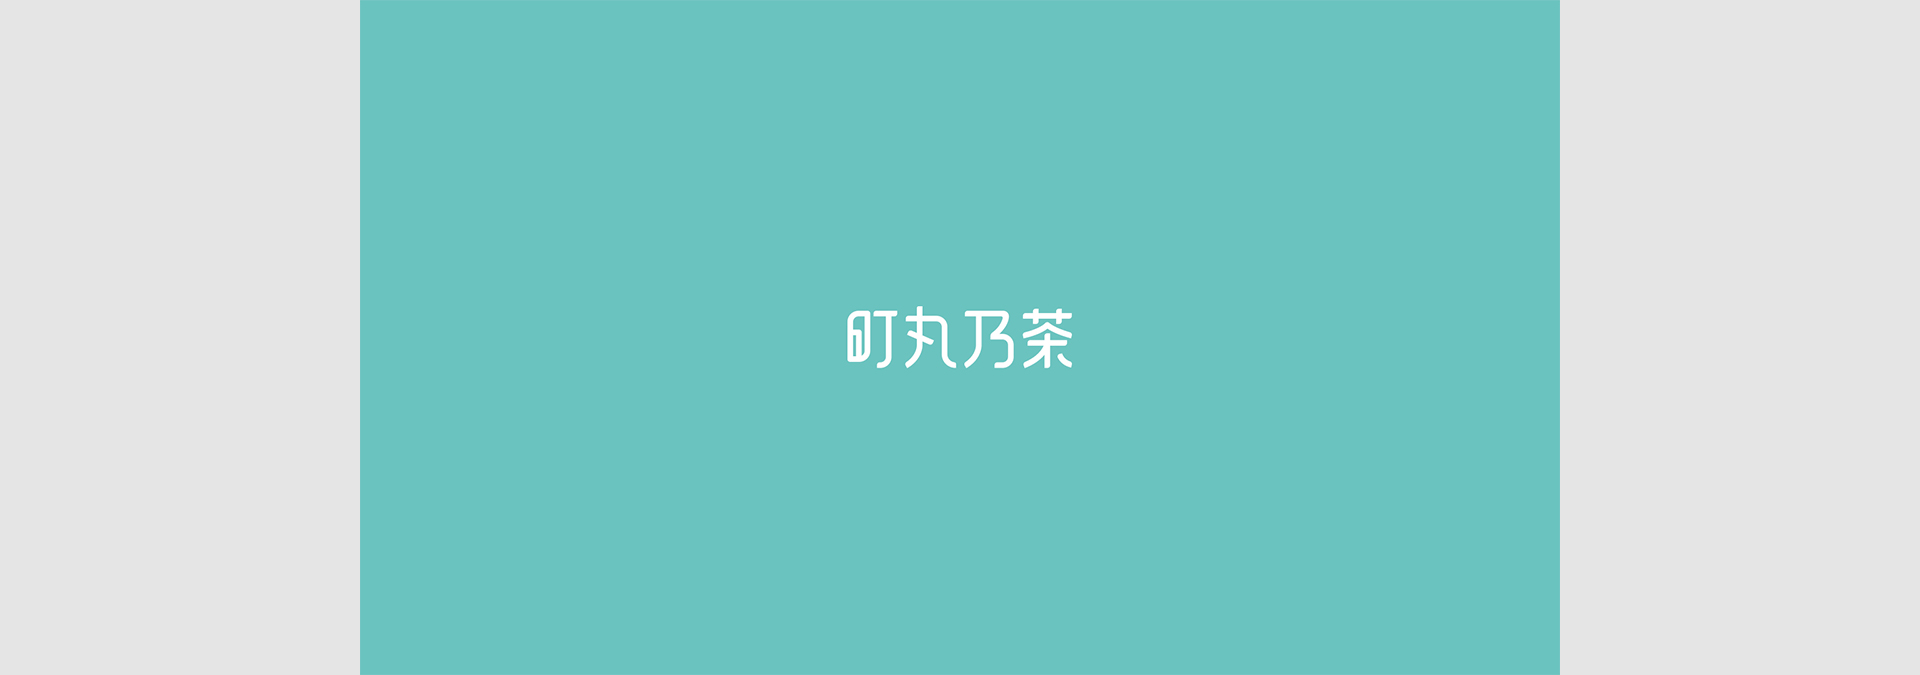 B12-町丸乃茶_01.jpg